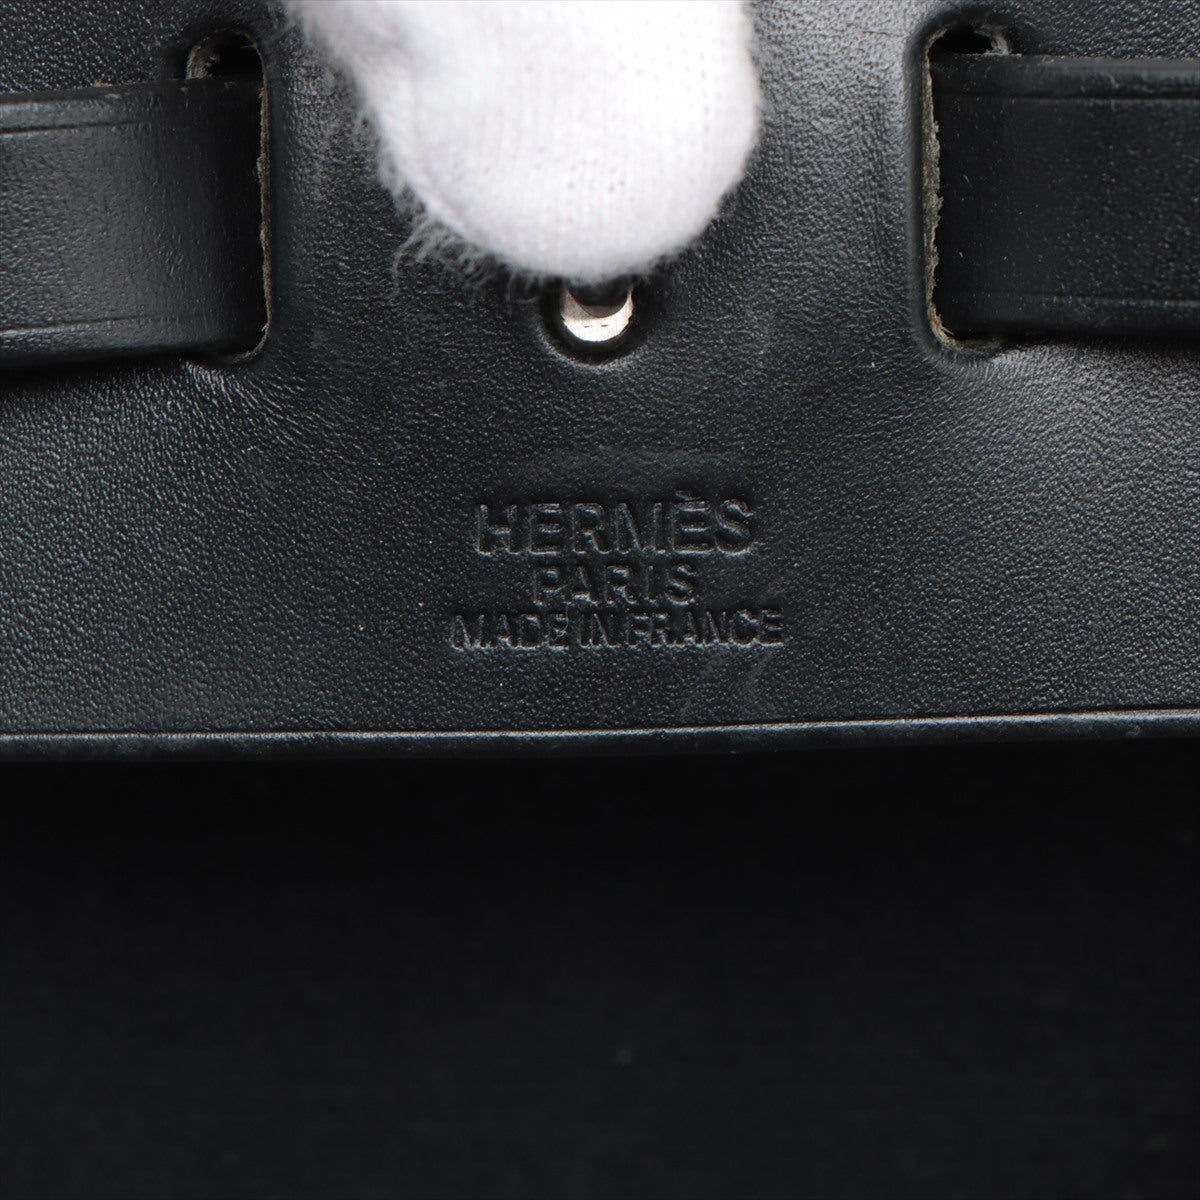 Hermès Air Bag AdPM Towerash   Black Silver Gold  C:1999